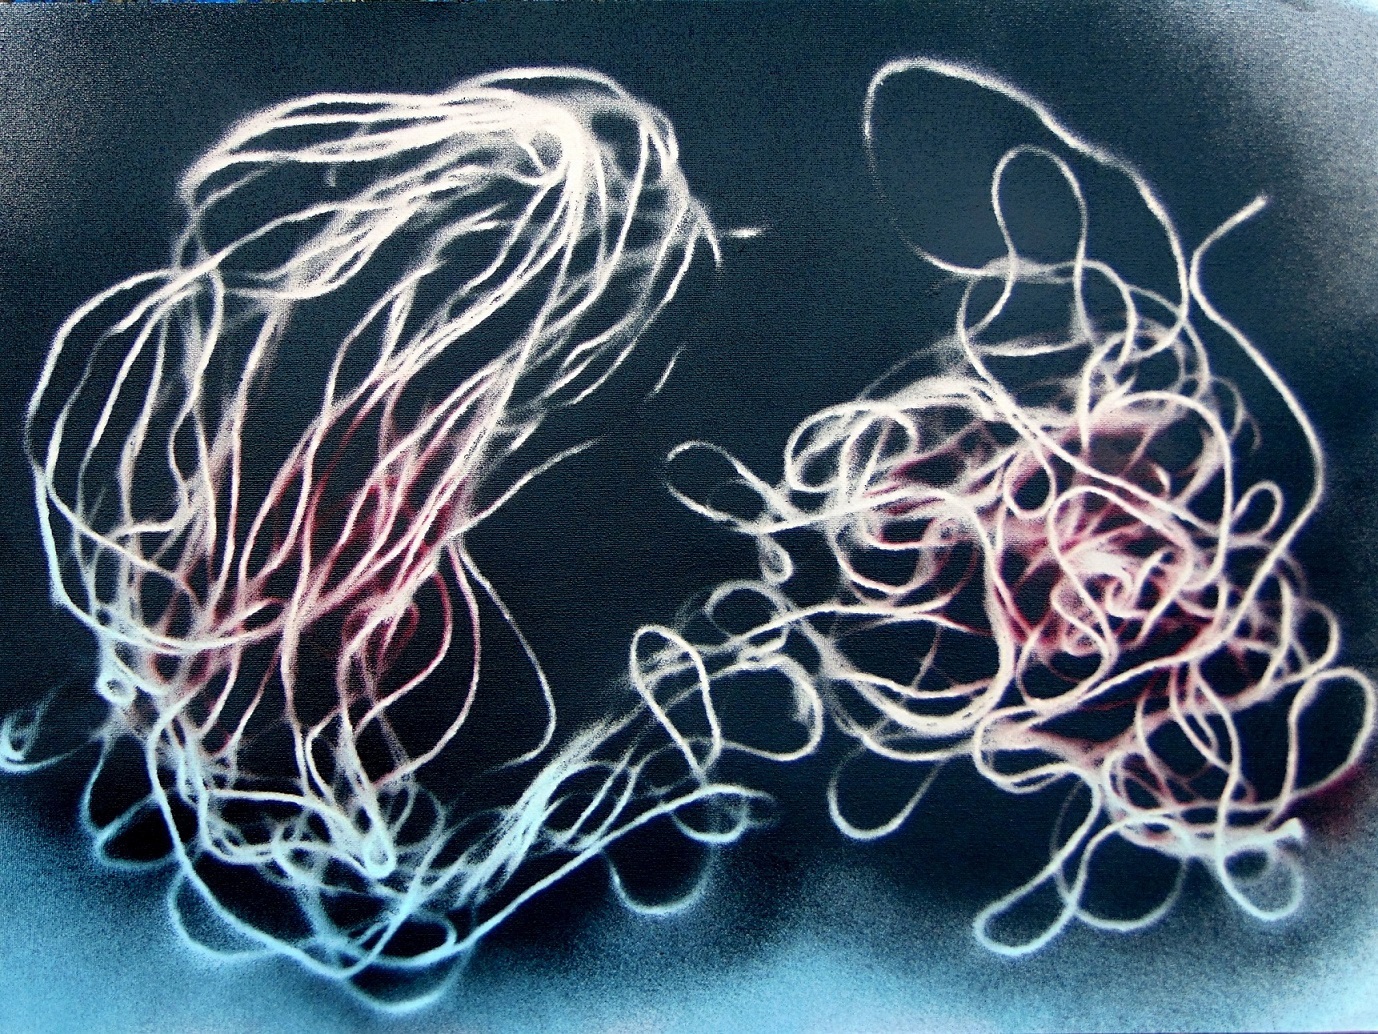 Unravelling (spray paint on canvas paper, 54cm x 71cm)